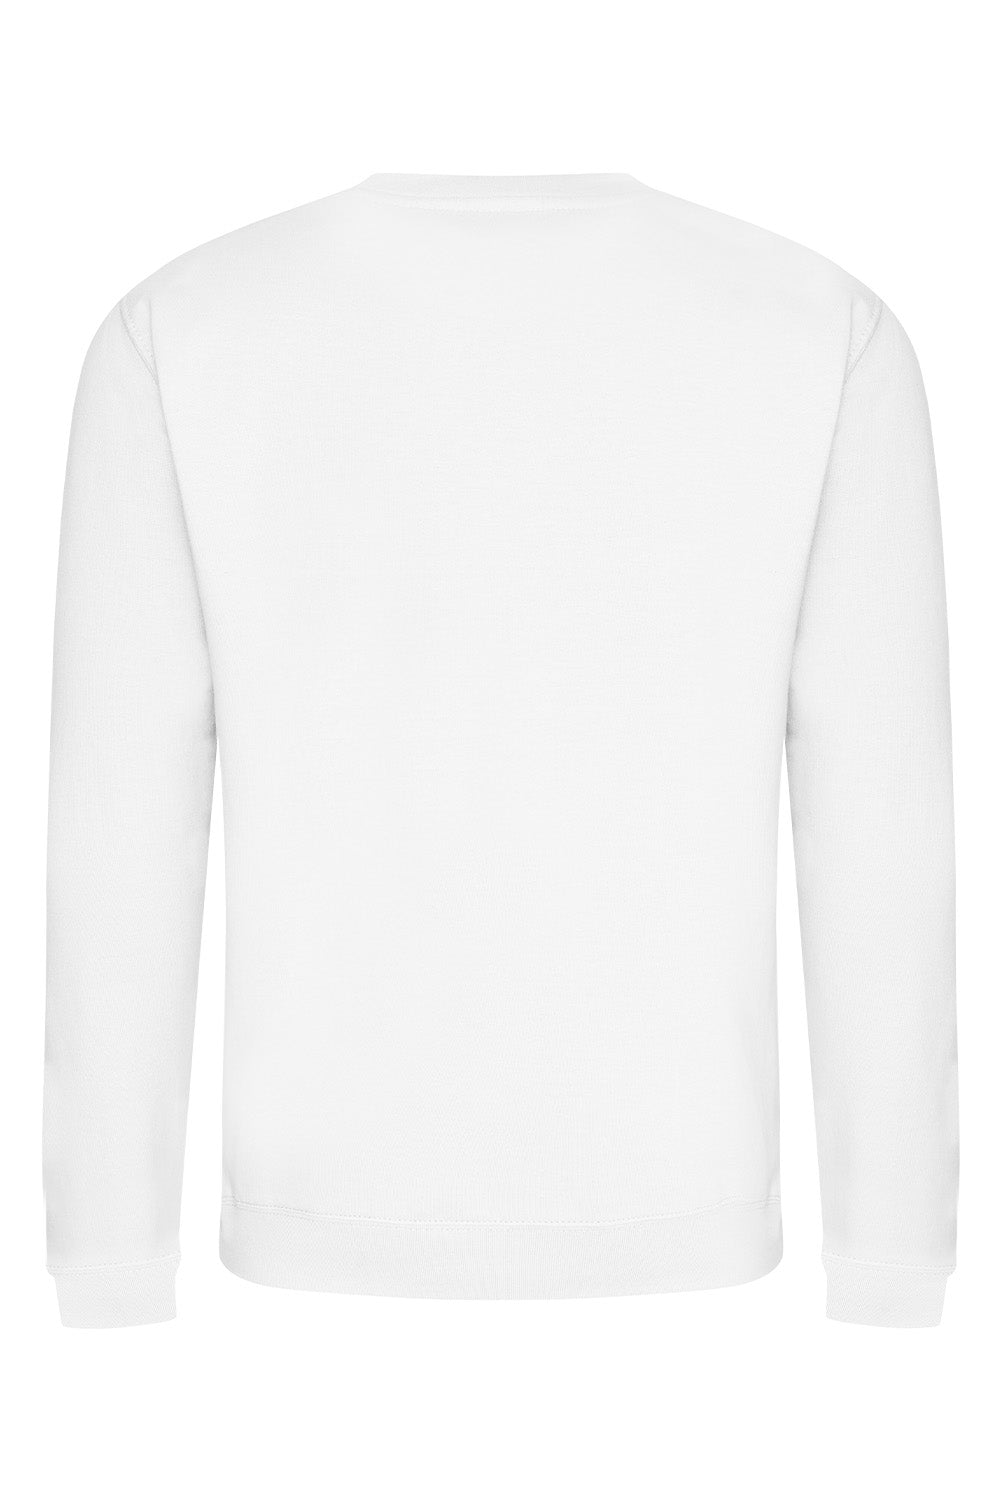 Let's Go Girls Sweatshirt In Arctic White (Custom Pack)